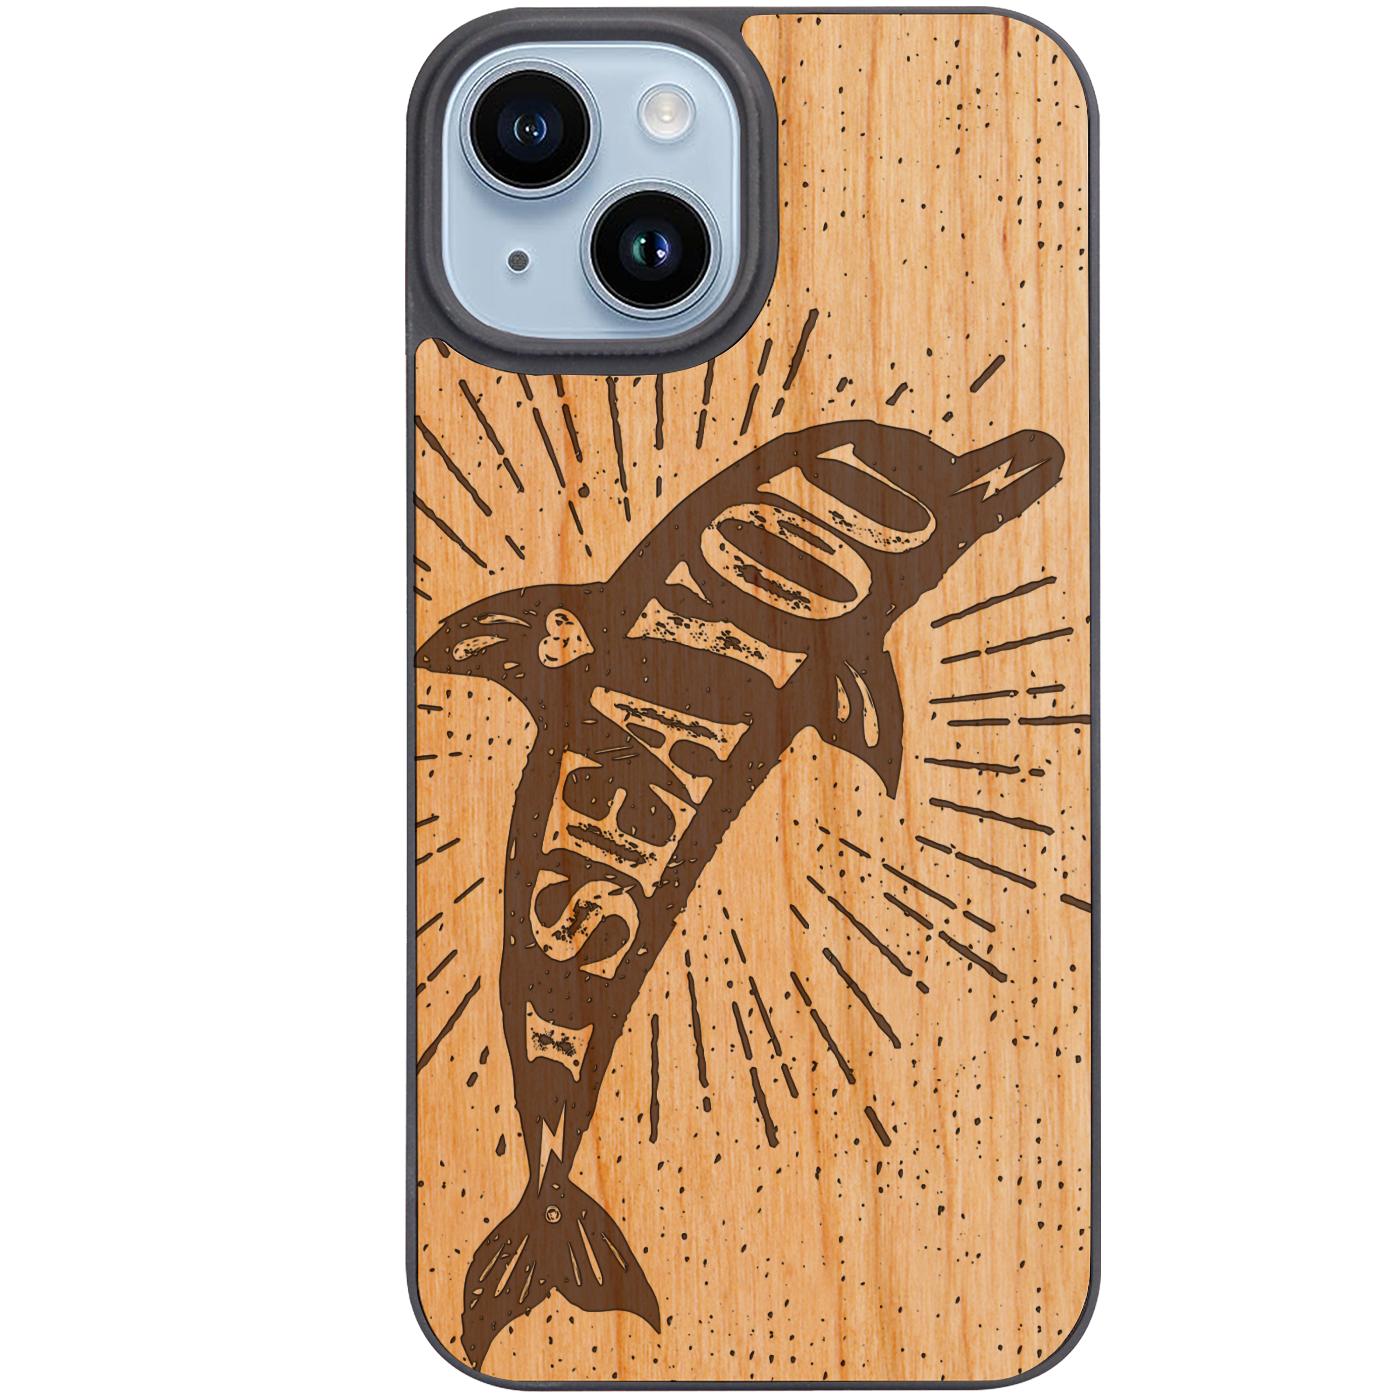 I Sea You - Engraved Phone Case